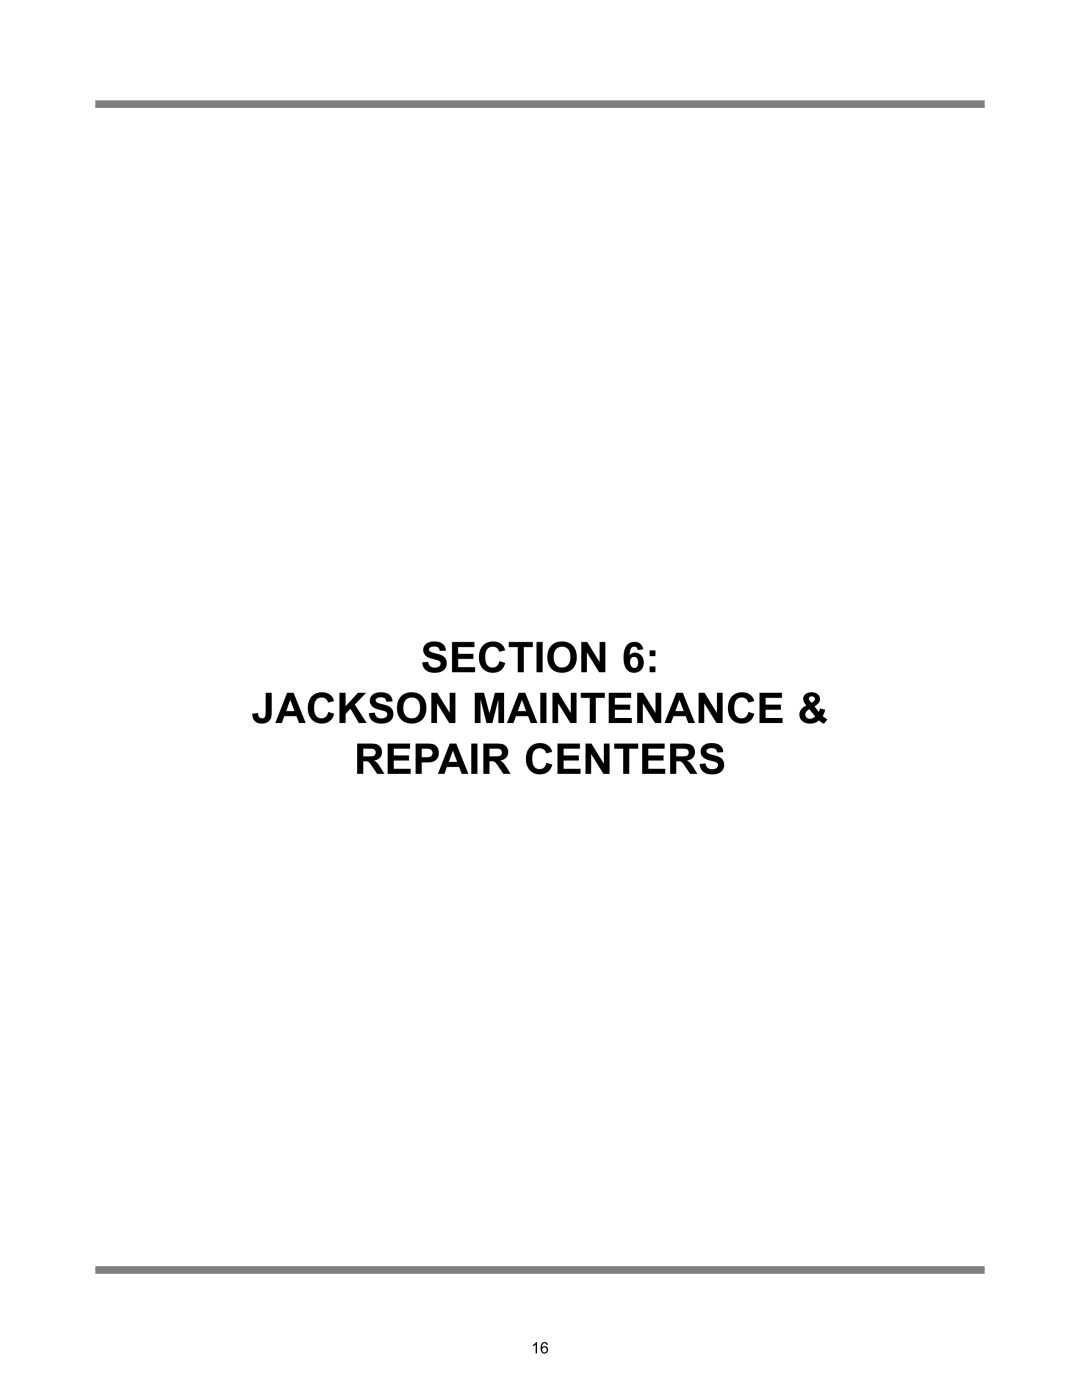 Jackson Whirl Wizard technical manual Section Jackson Maintenance & Repair Centers 